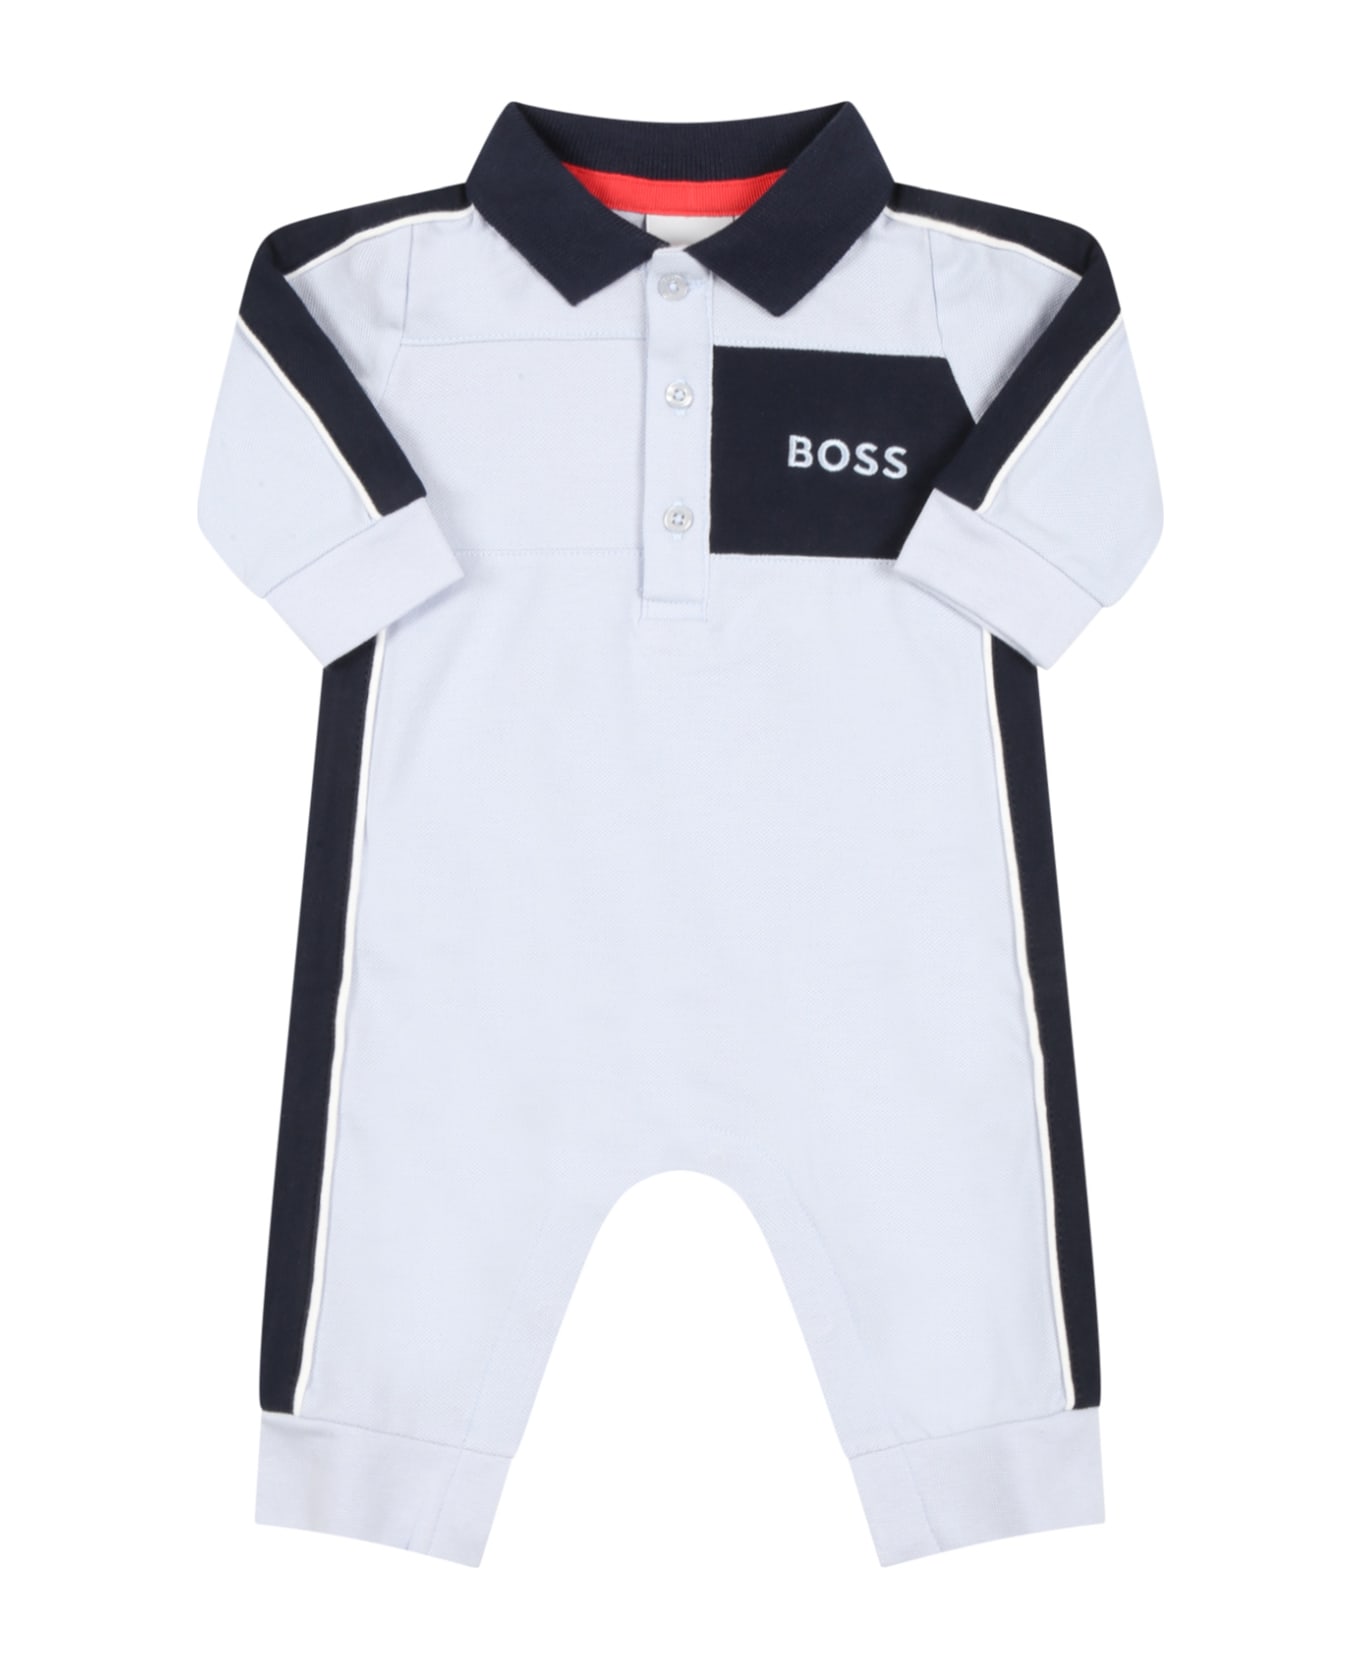 Hugo Boss Light Blue Babygrow For Baby Boy With Logo - Light Blue